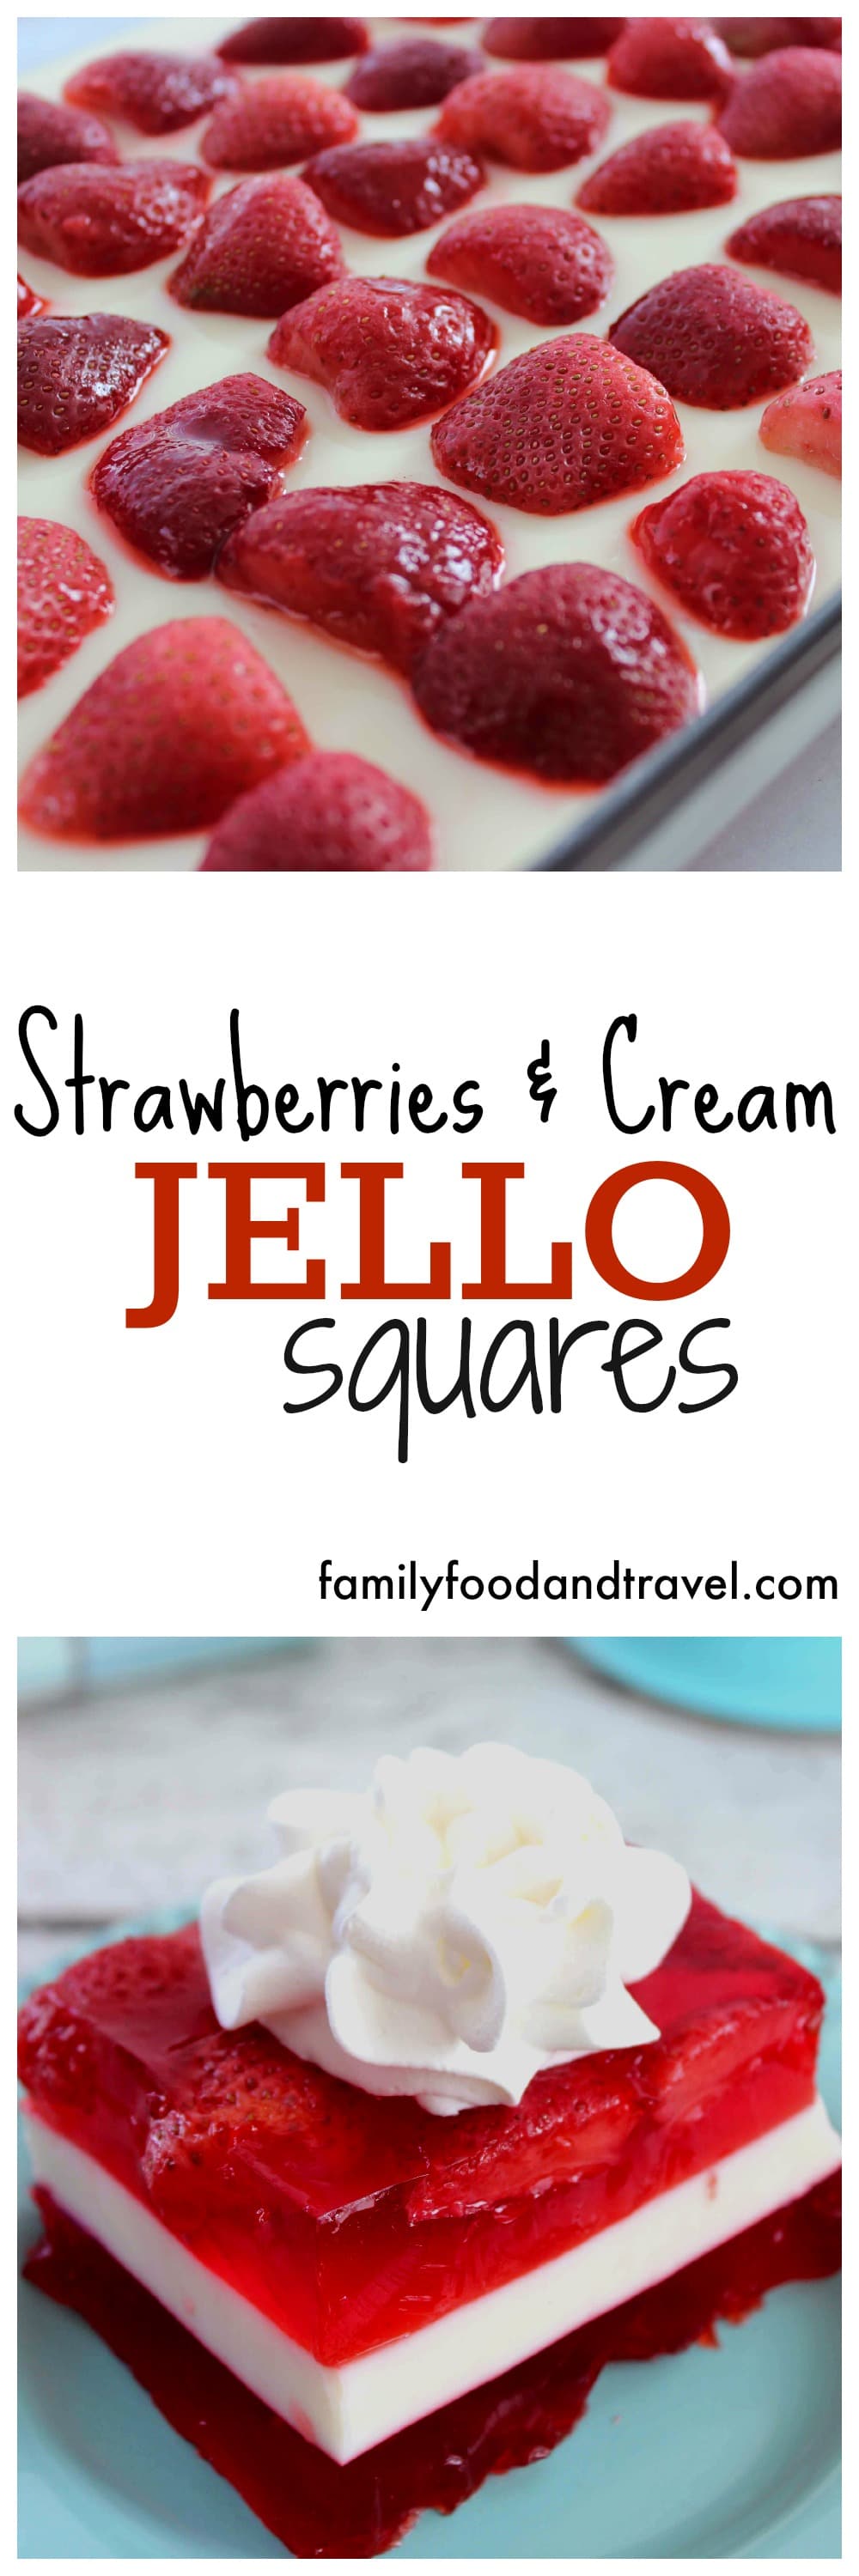 Strawberries and Cream Jello Squares